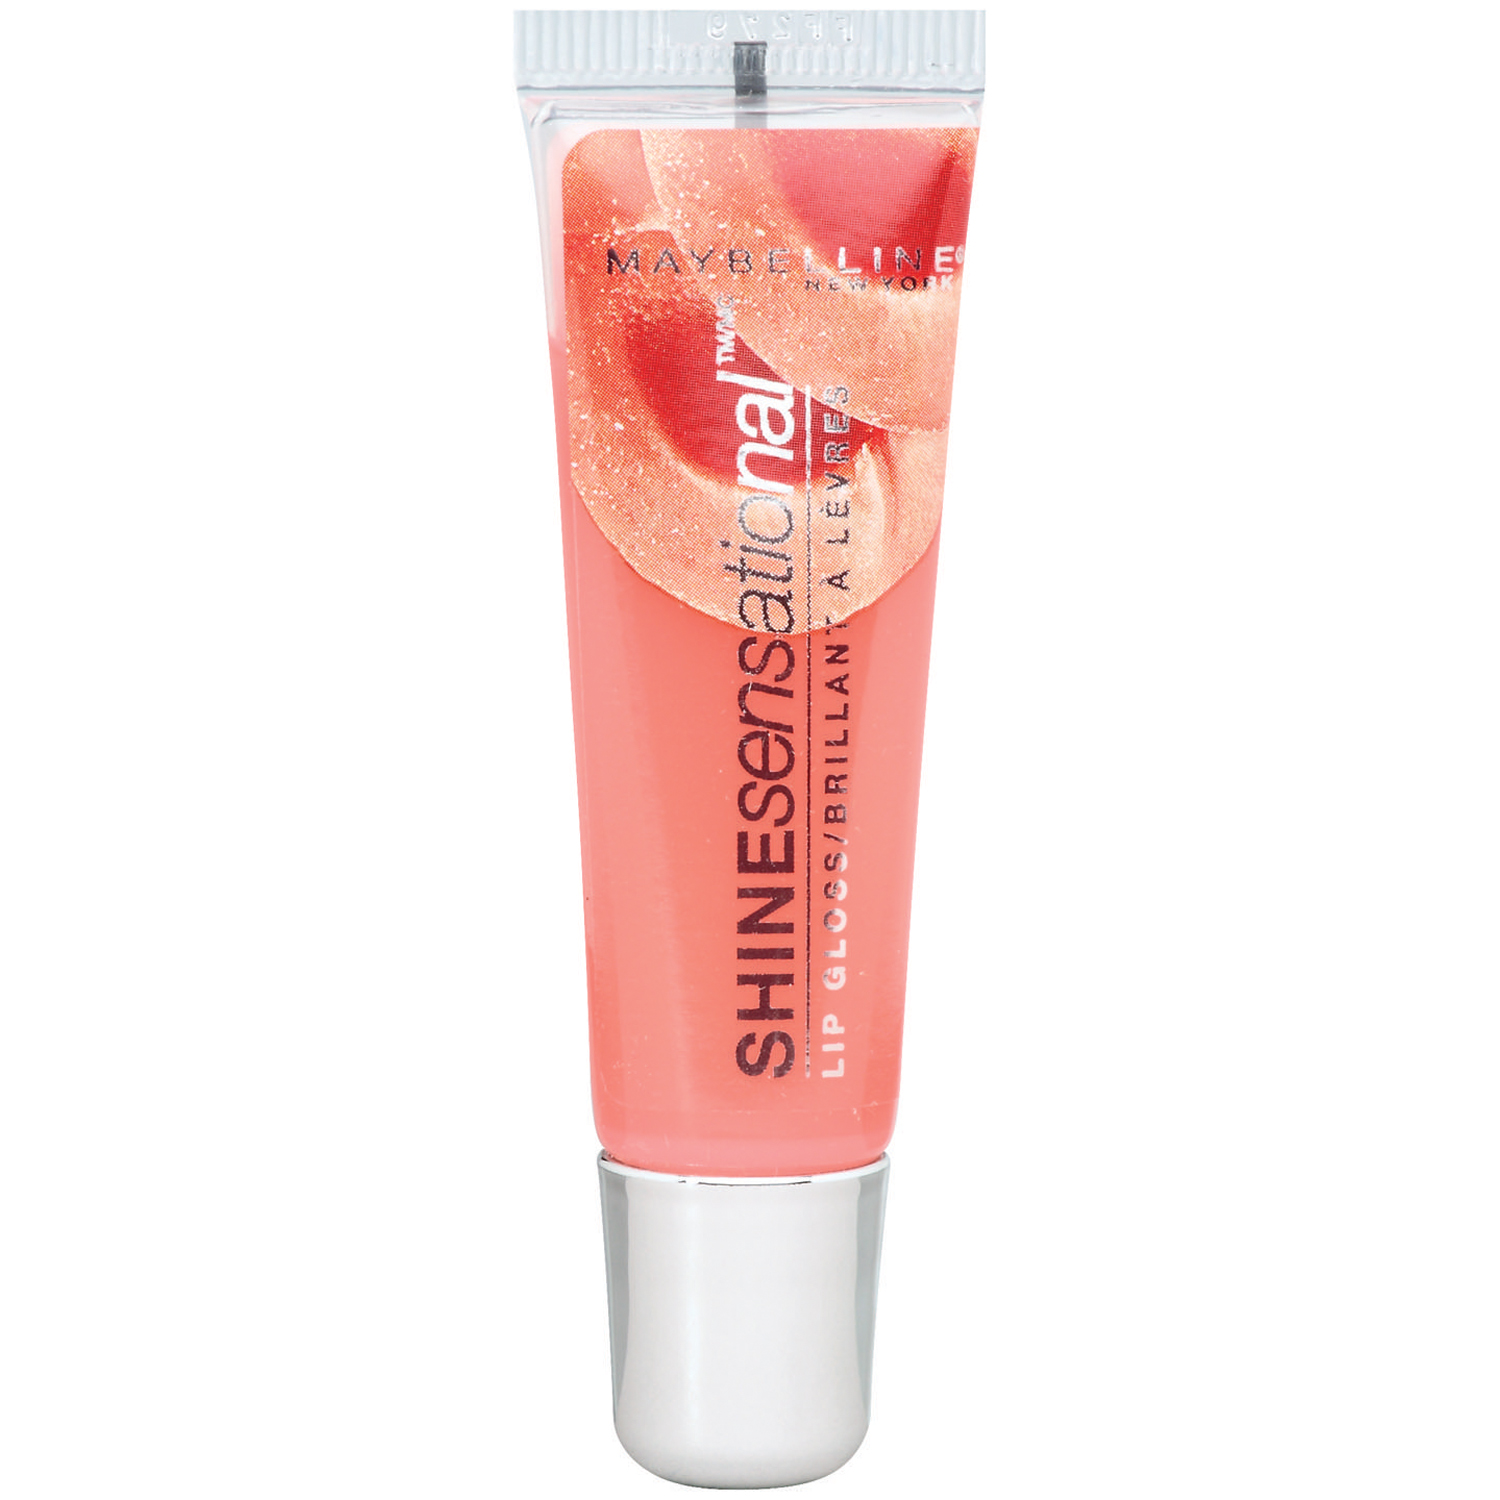 Maybelline New York Shine Sensational Lip Gloss, Peach Sorbet, 0.38 fl oz